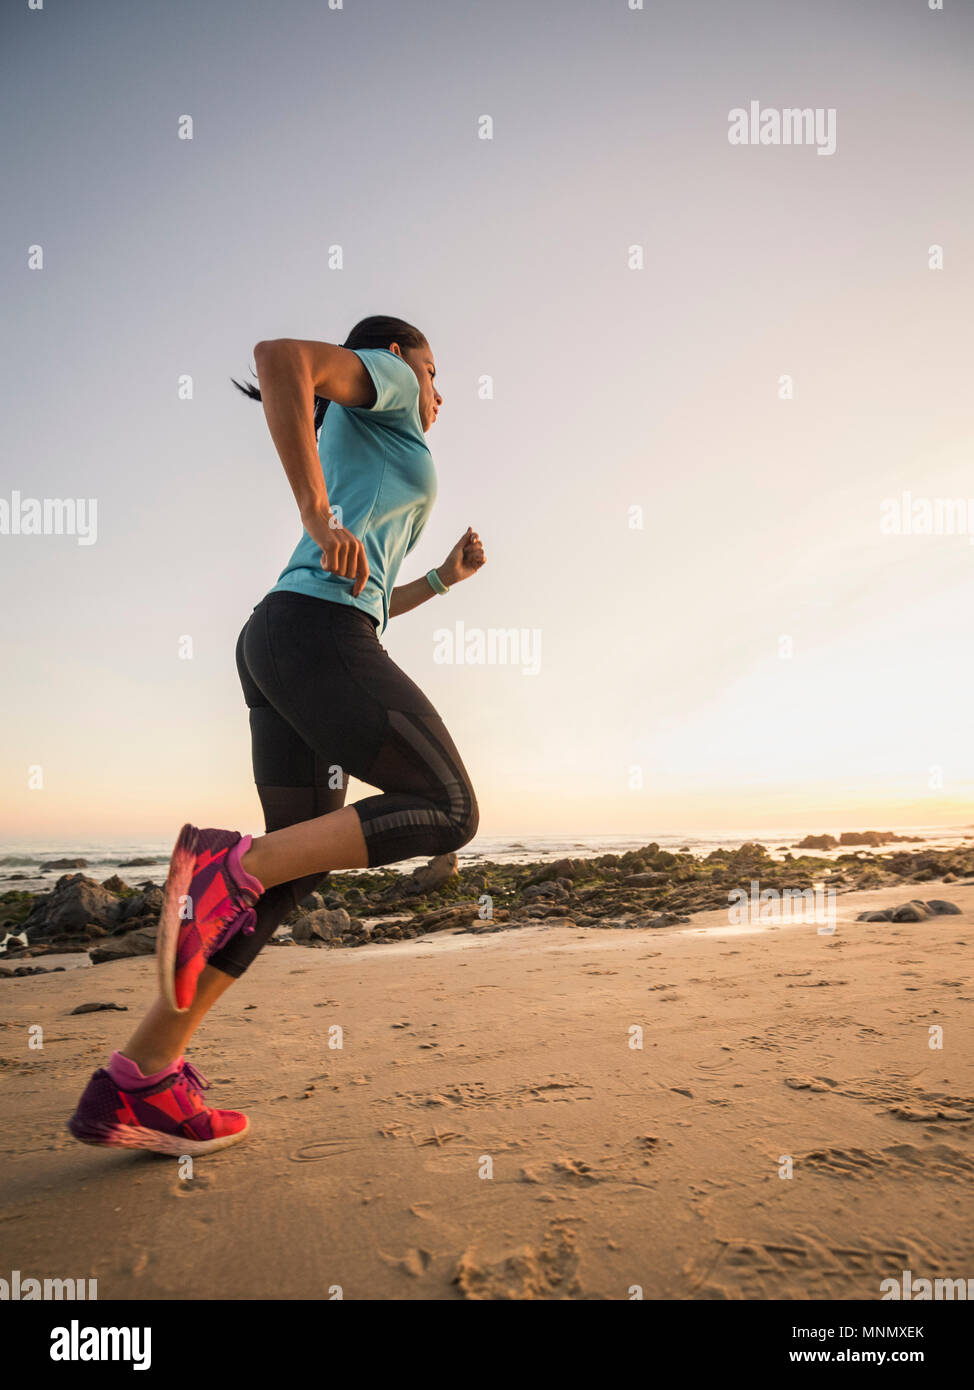 USA, California, Newport Beach, Woman jogging on beach Stock Photo